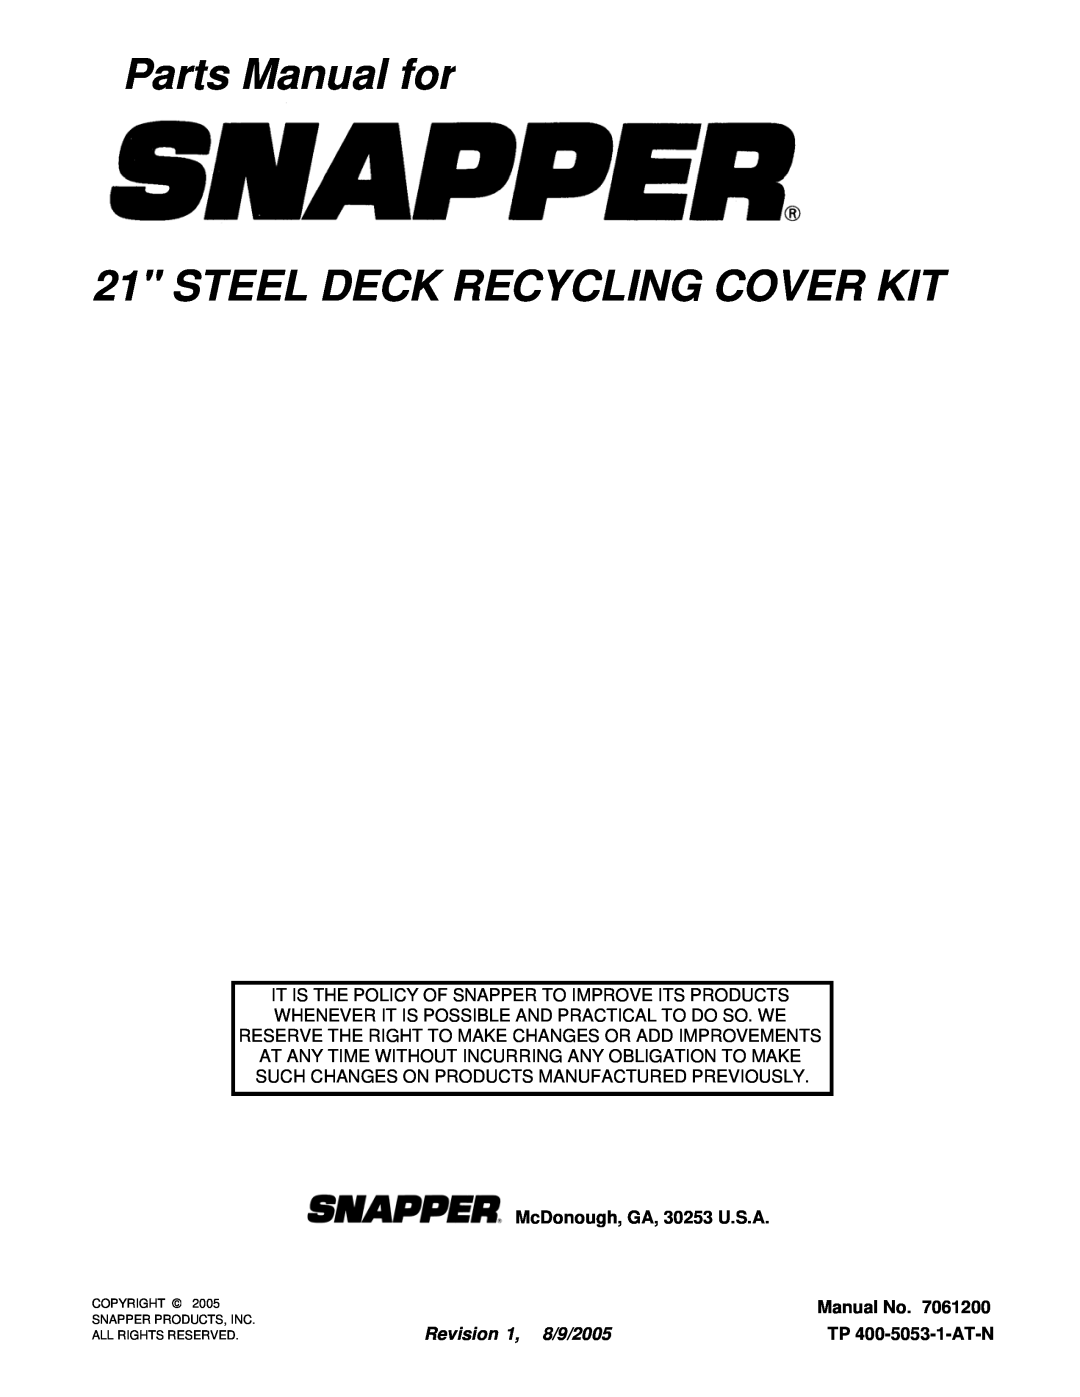 Snapper 7061200 manual Steel Deck Recycling Cover Kit, Parts Manual for, McDonough, GA, 30253 U.S.A, Manual No 